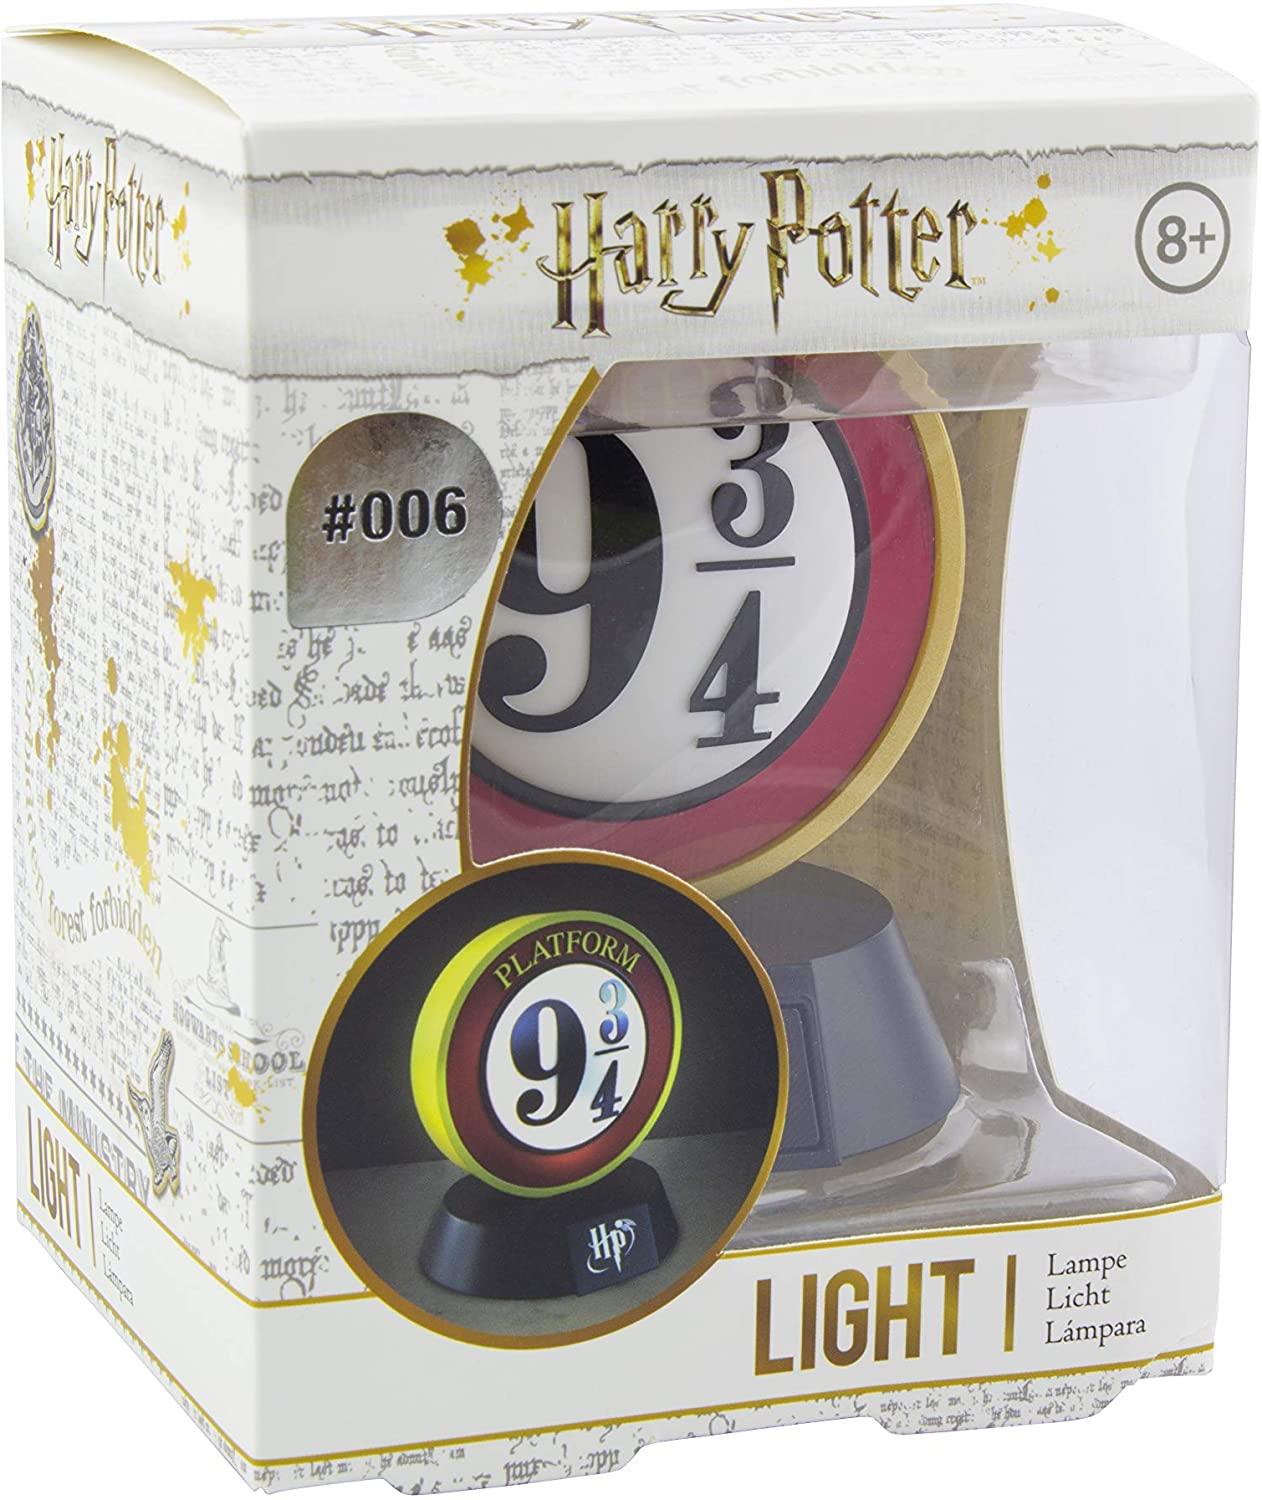 Harry Potter Icon Light Plateforme 9,34 [Goodies] - flash vidéo